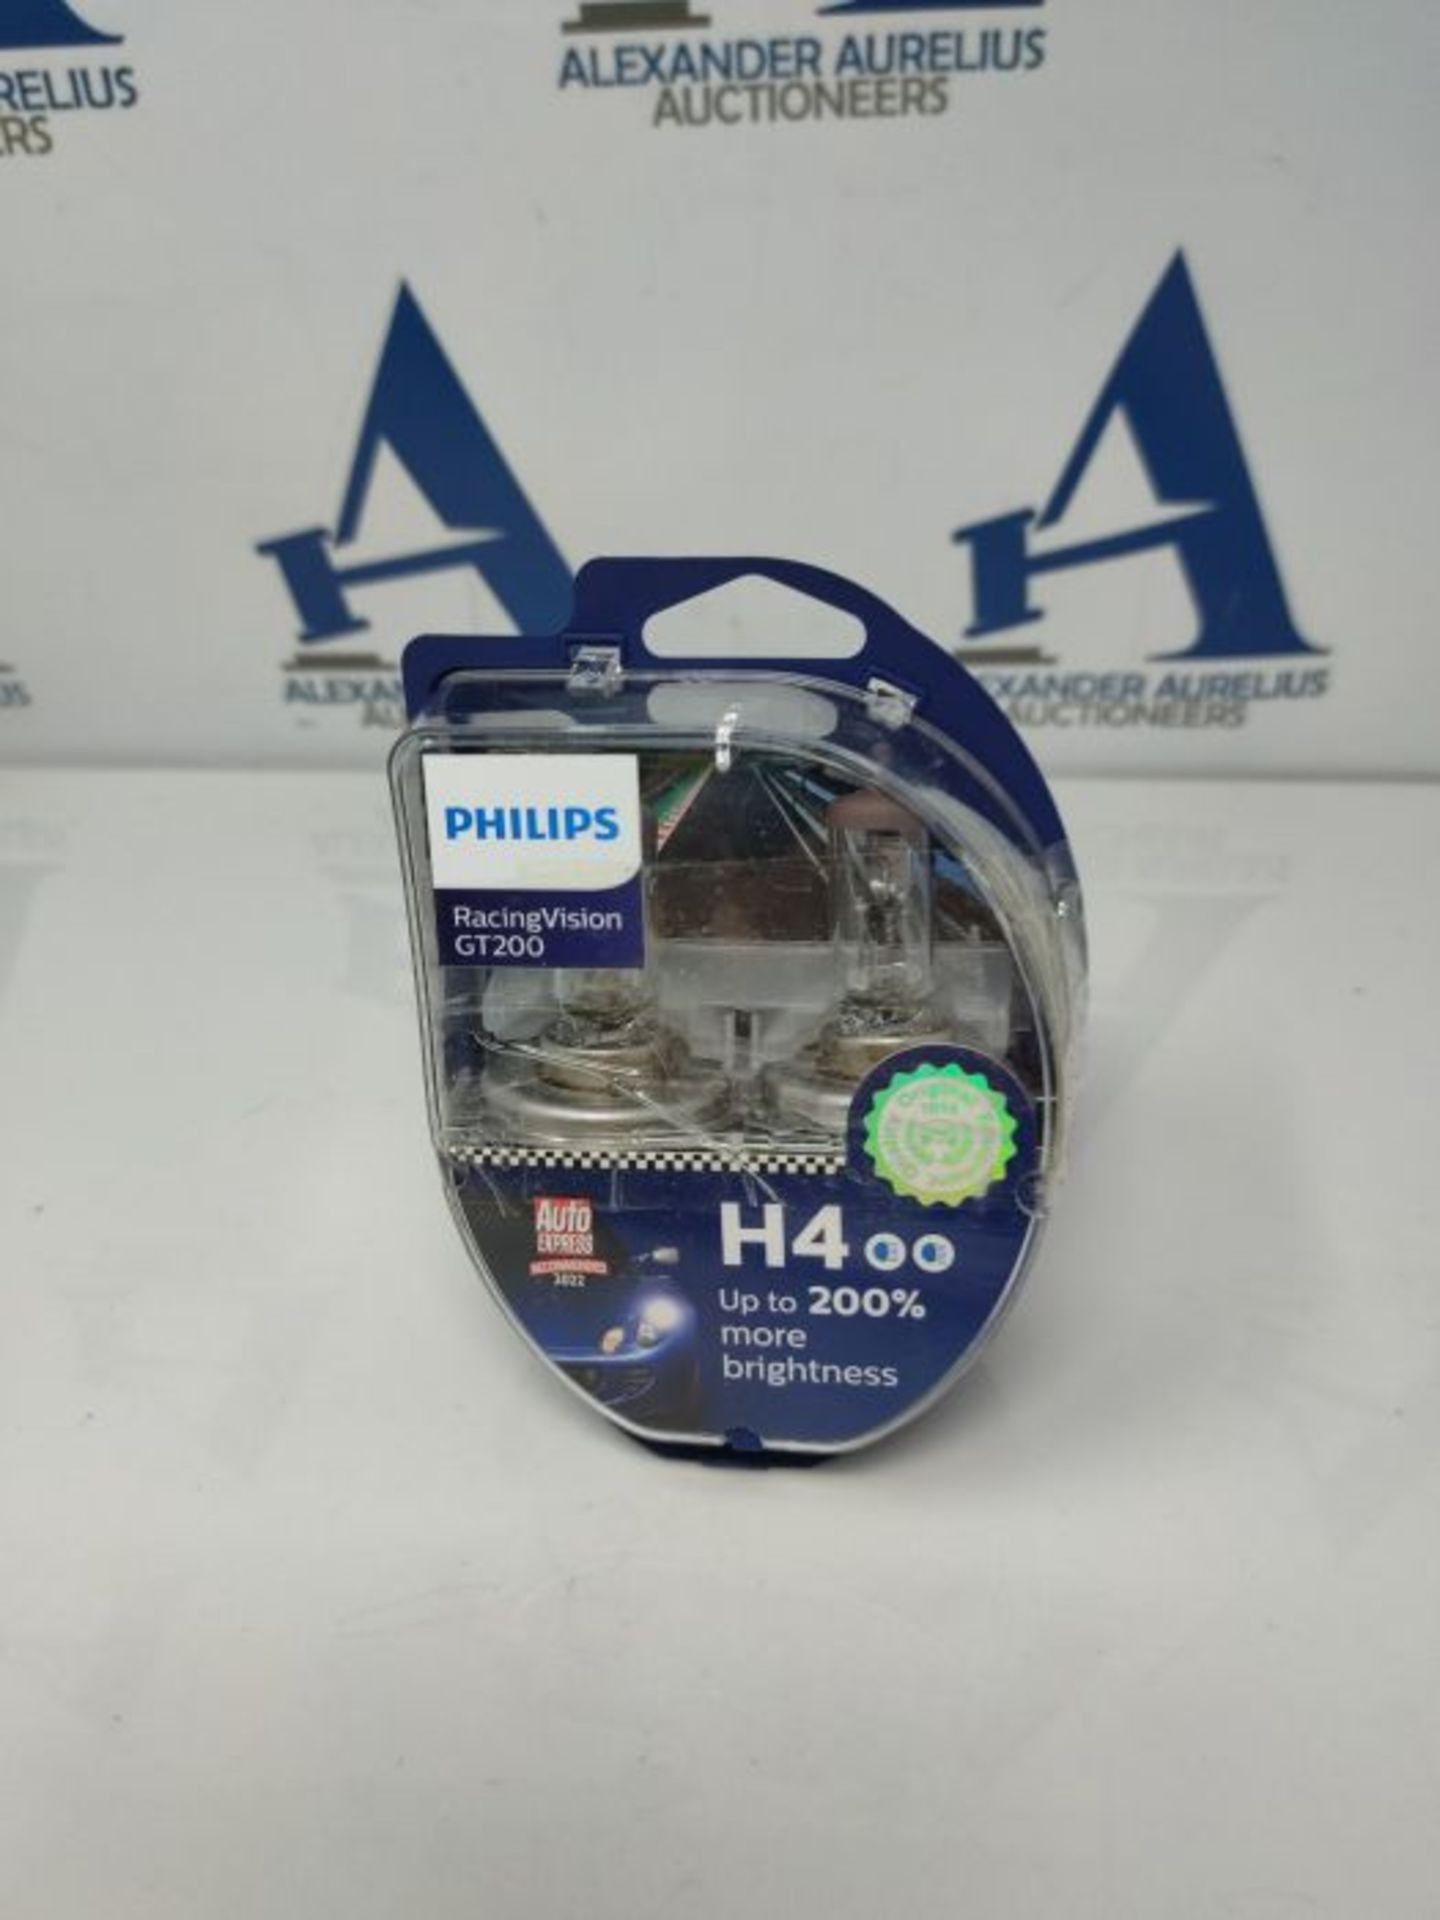 Philips 575528 RacingVision GT200 H4 car headlight bulb +200%, set of 2 - Image 2 of 3